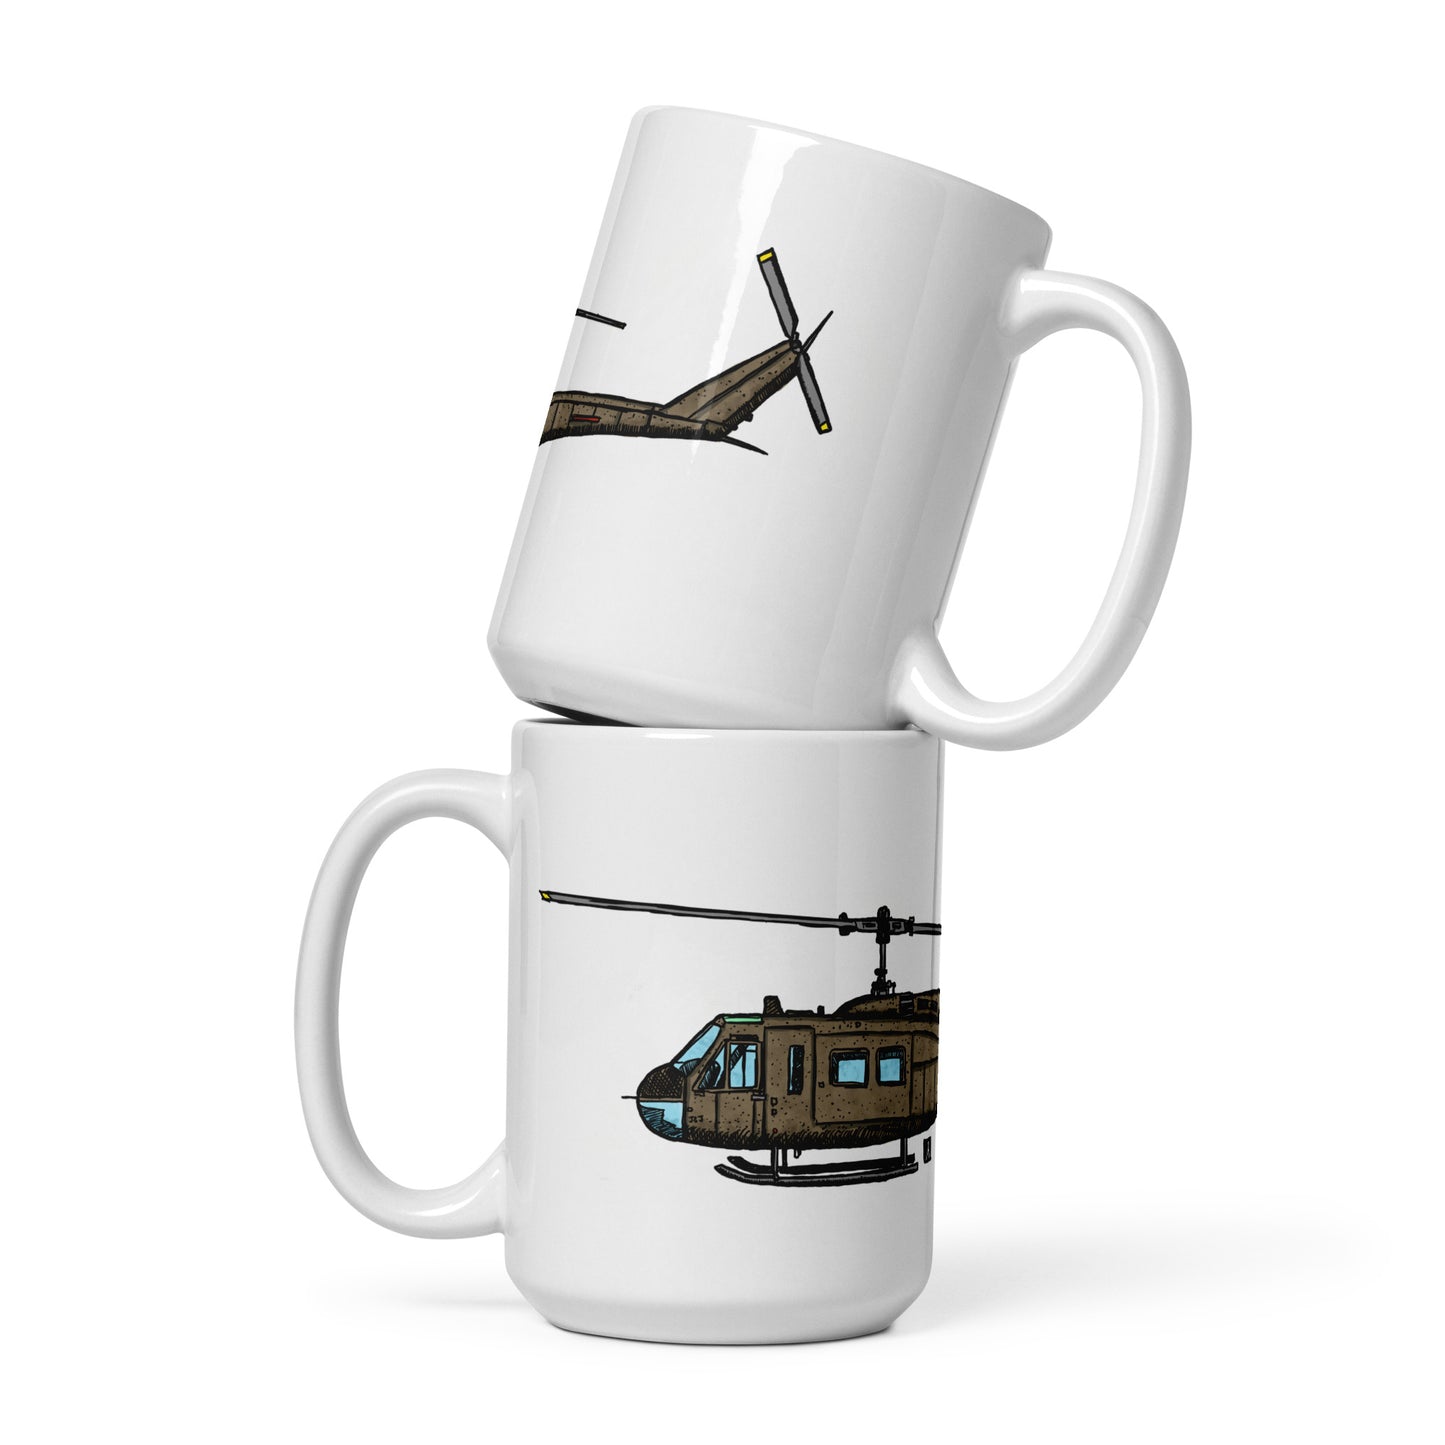 BellavanceInk: Coffee Mug With A Vintage Huey UH-1 Helicopter Pen & Ink Sketch With Watercolor